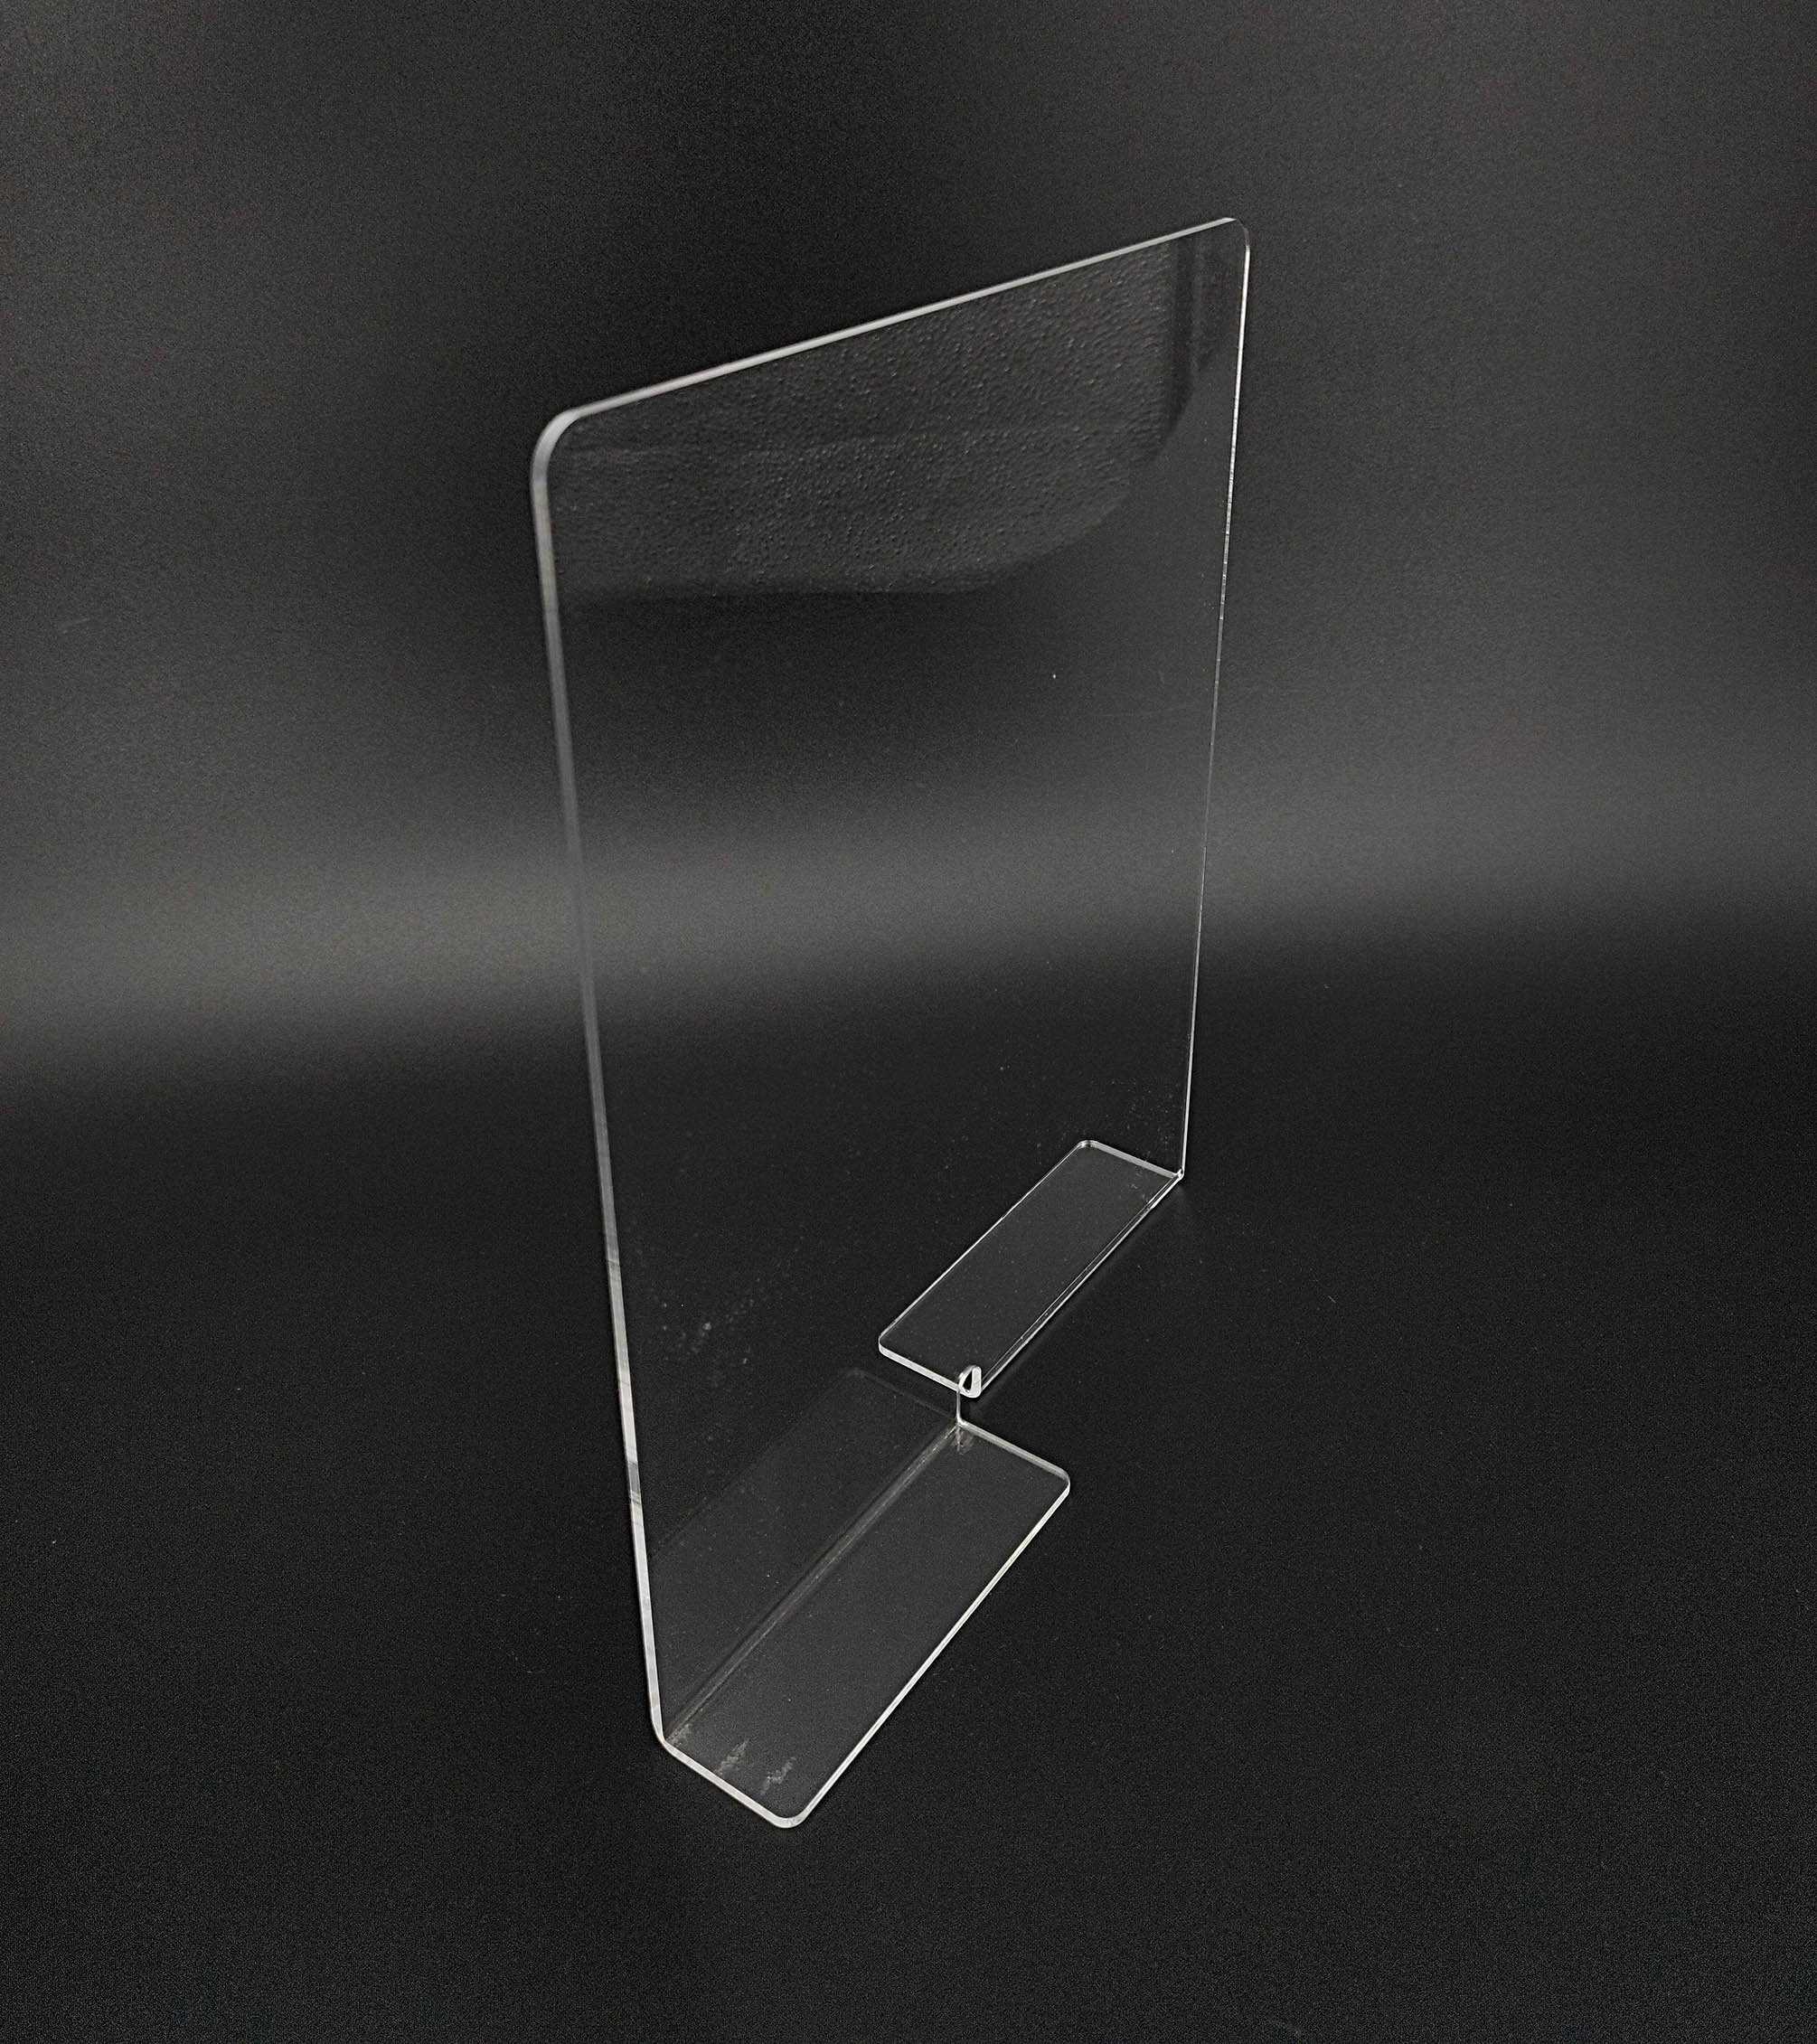 Rebrilliant Plexiglass Acrylic Closet Shelf Dividers for Clothes